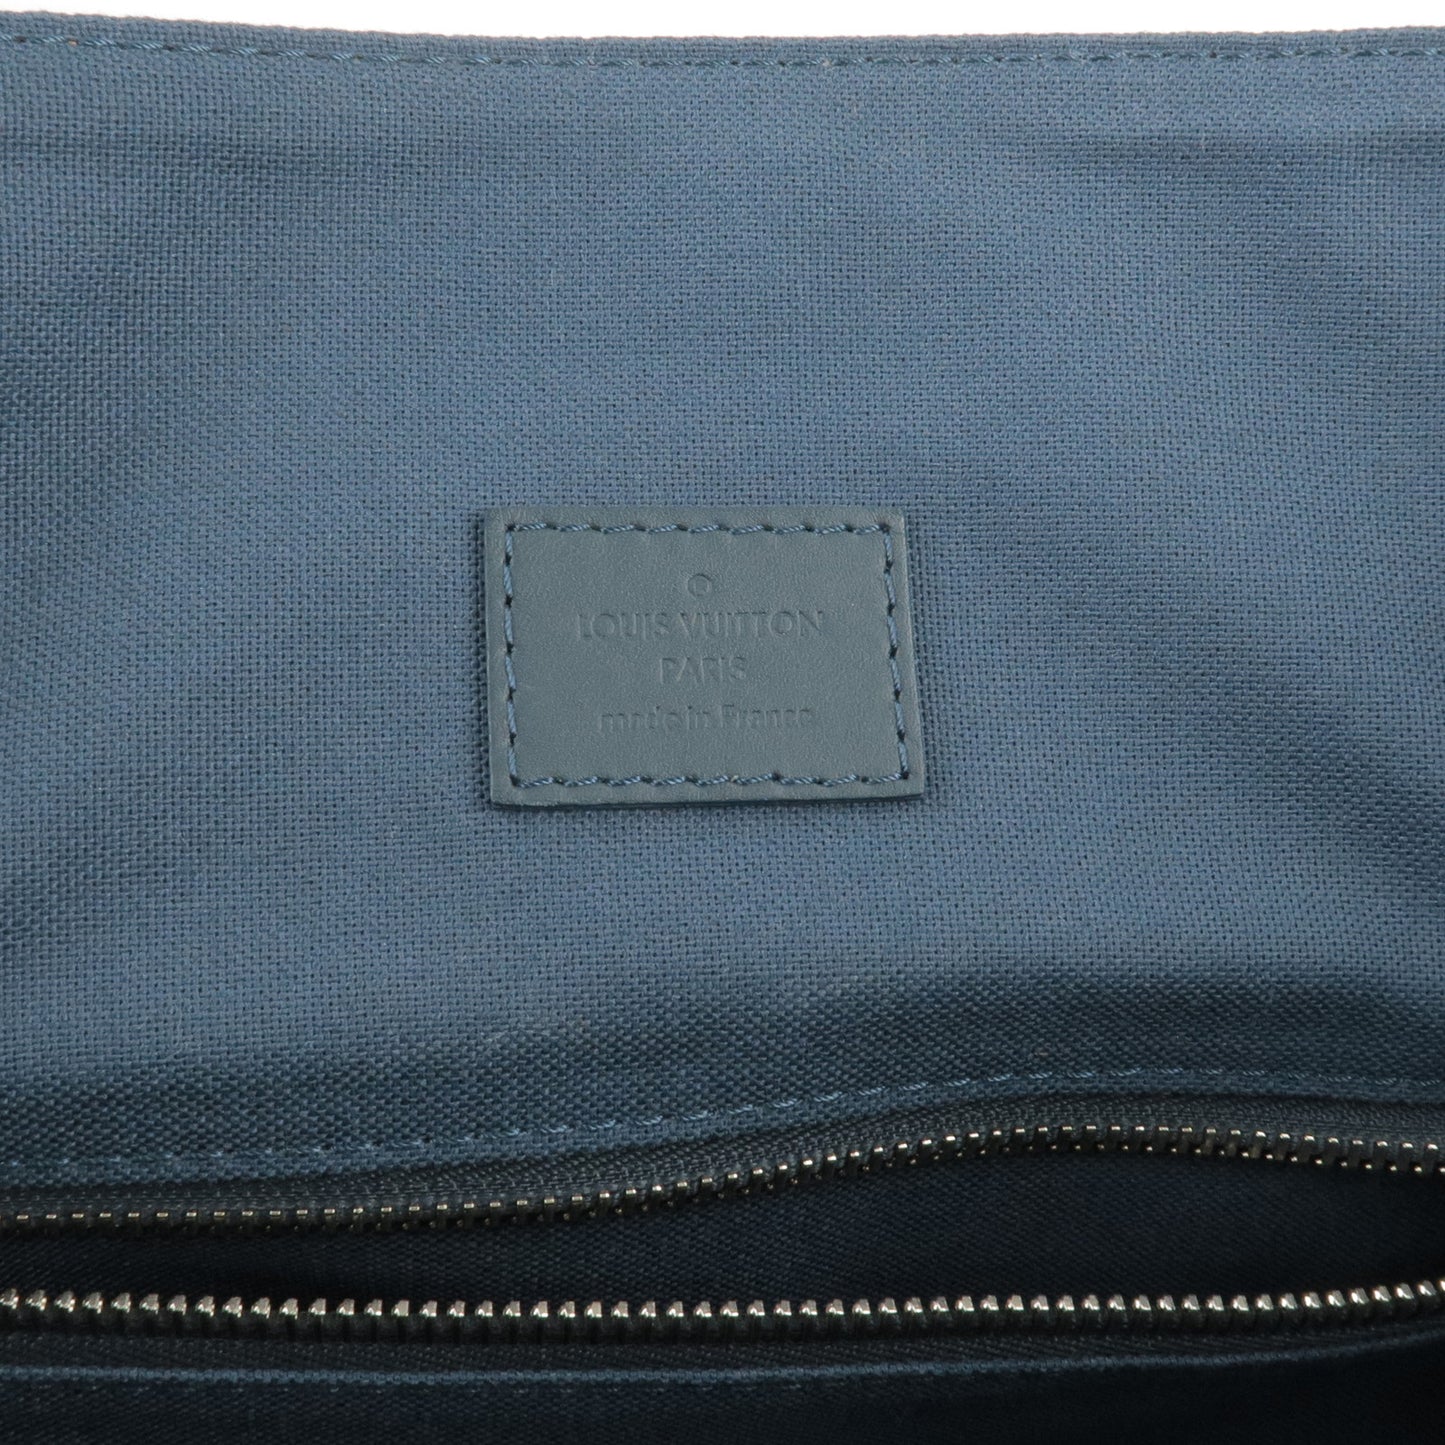 Pack - Vuitton - Back - Runner - Ruck - N41377 – dct - ep_vintage ORANGE  Store - Bag - Damier - Louis - Louis Vuitton pre-owned Steamer bag - Sack